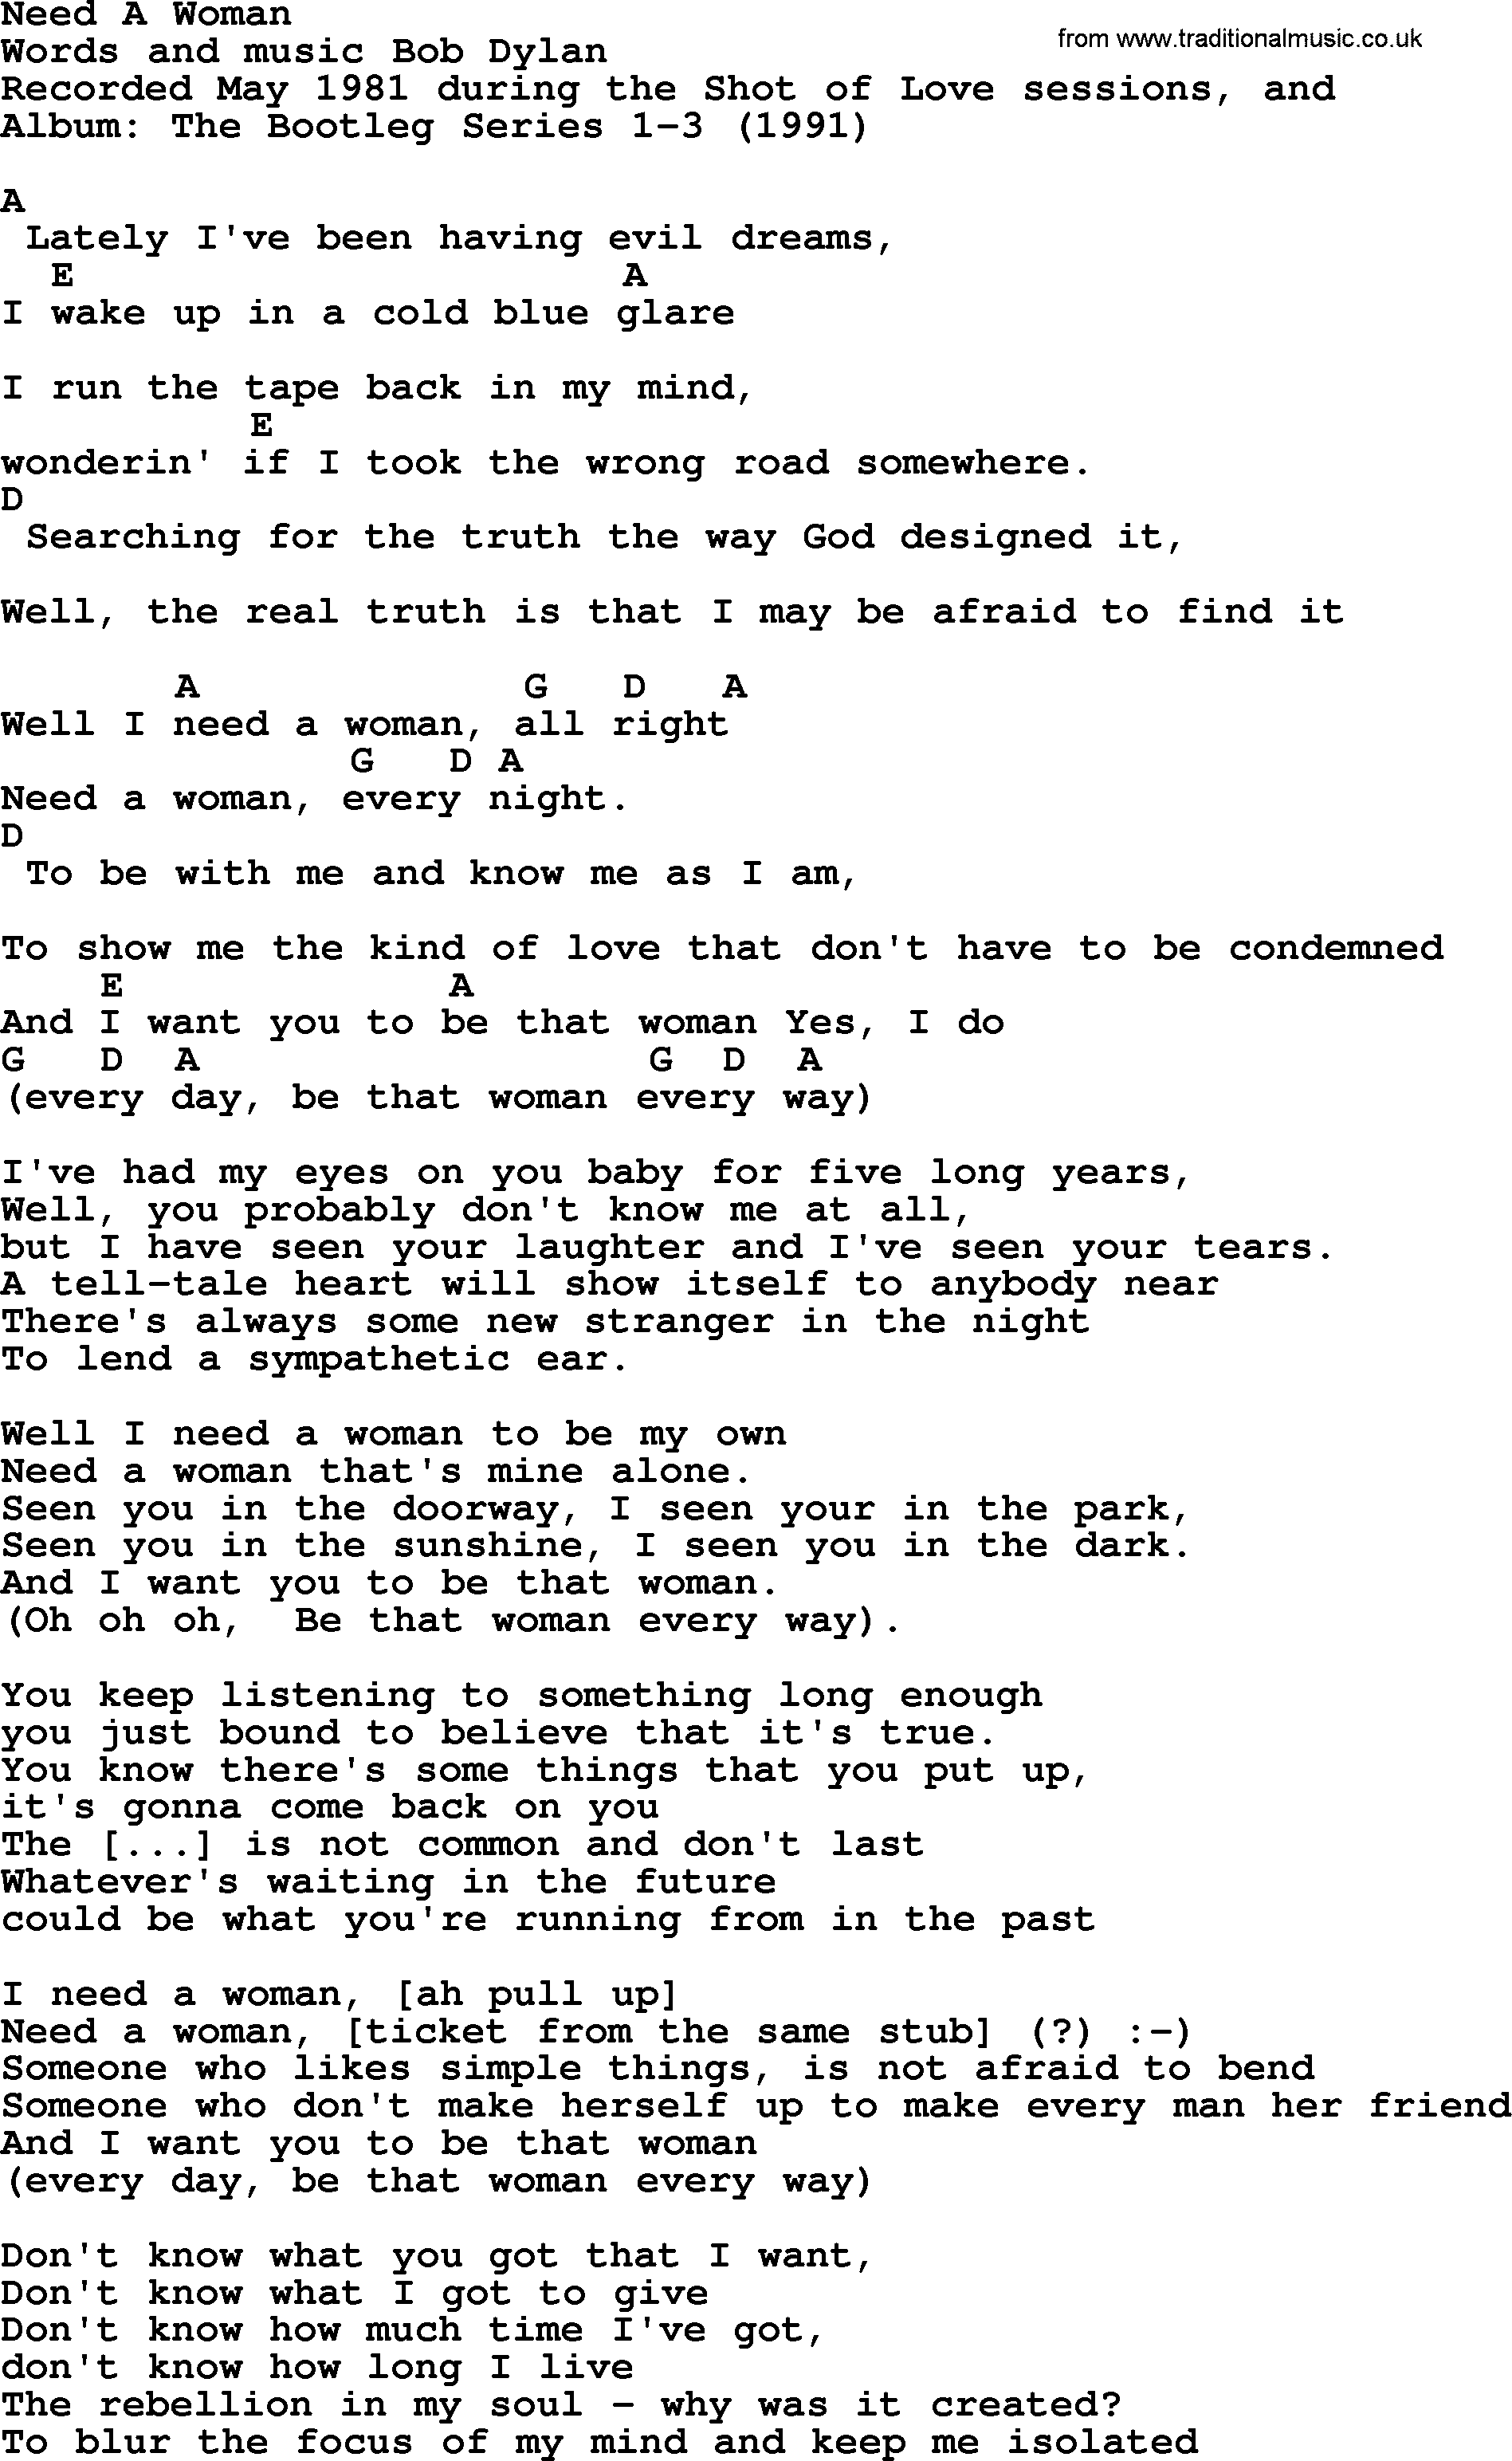 Bob Dylan song, lyrics with chords - Need A Woman